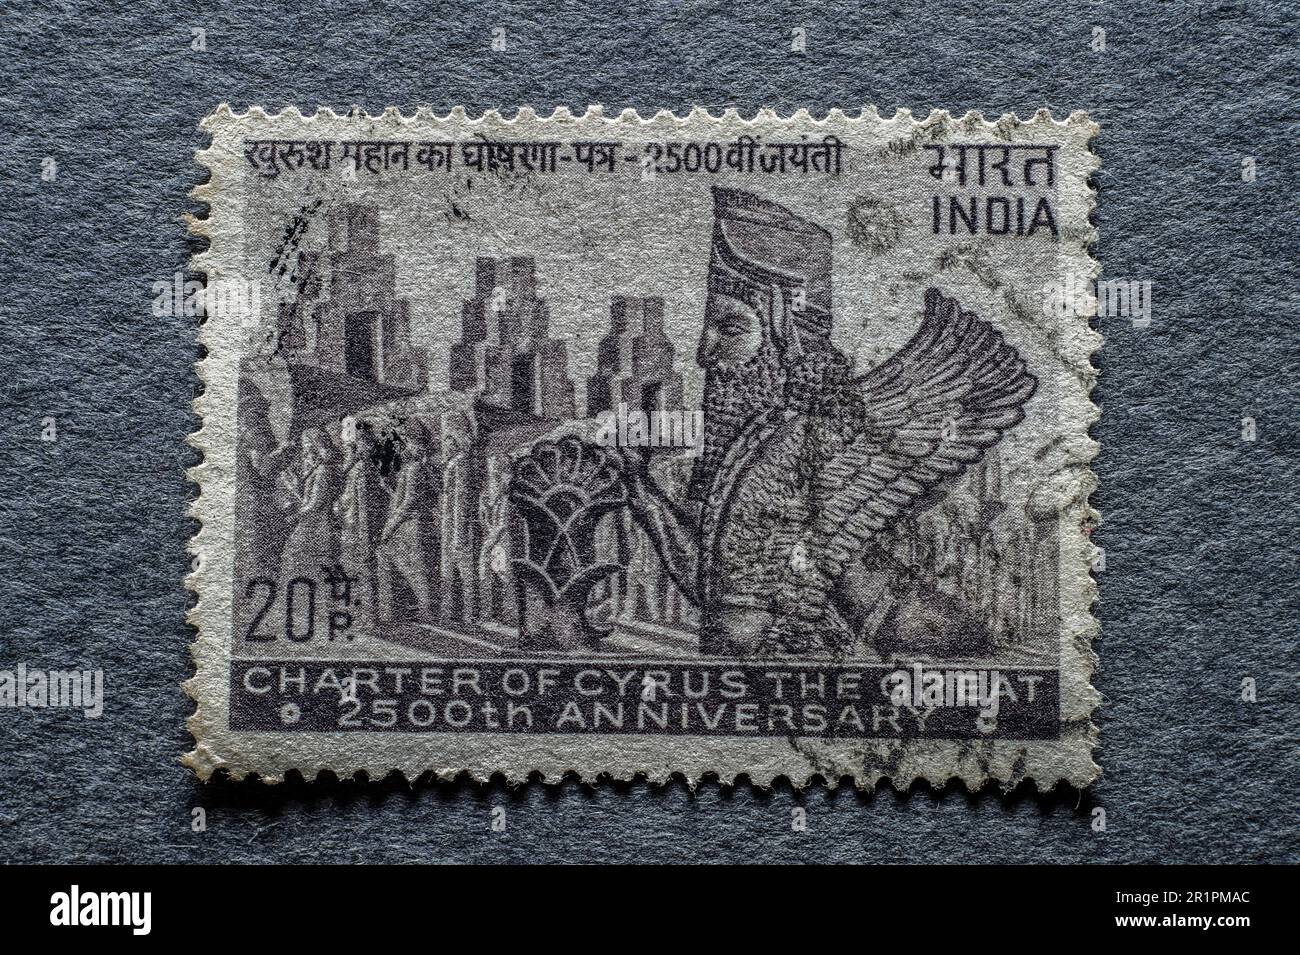 09 13 2015  Vintage Postal Stamp of. Cyrus the great 2500th anniversary,Parsi Studioshot Lokgram Kalyan Maharashtra India.Asia. Stock Photo